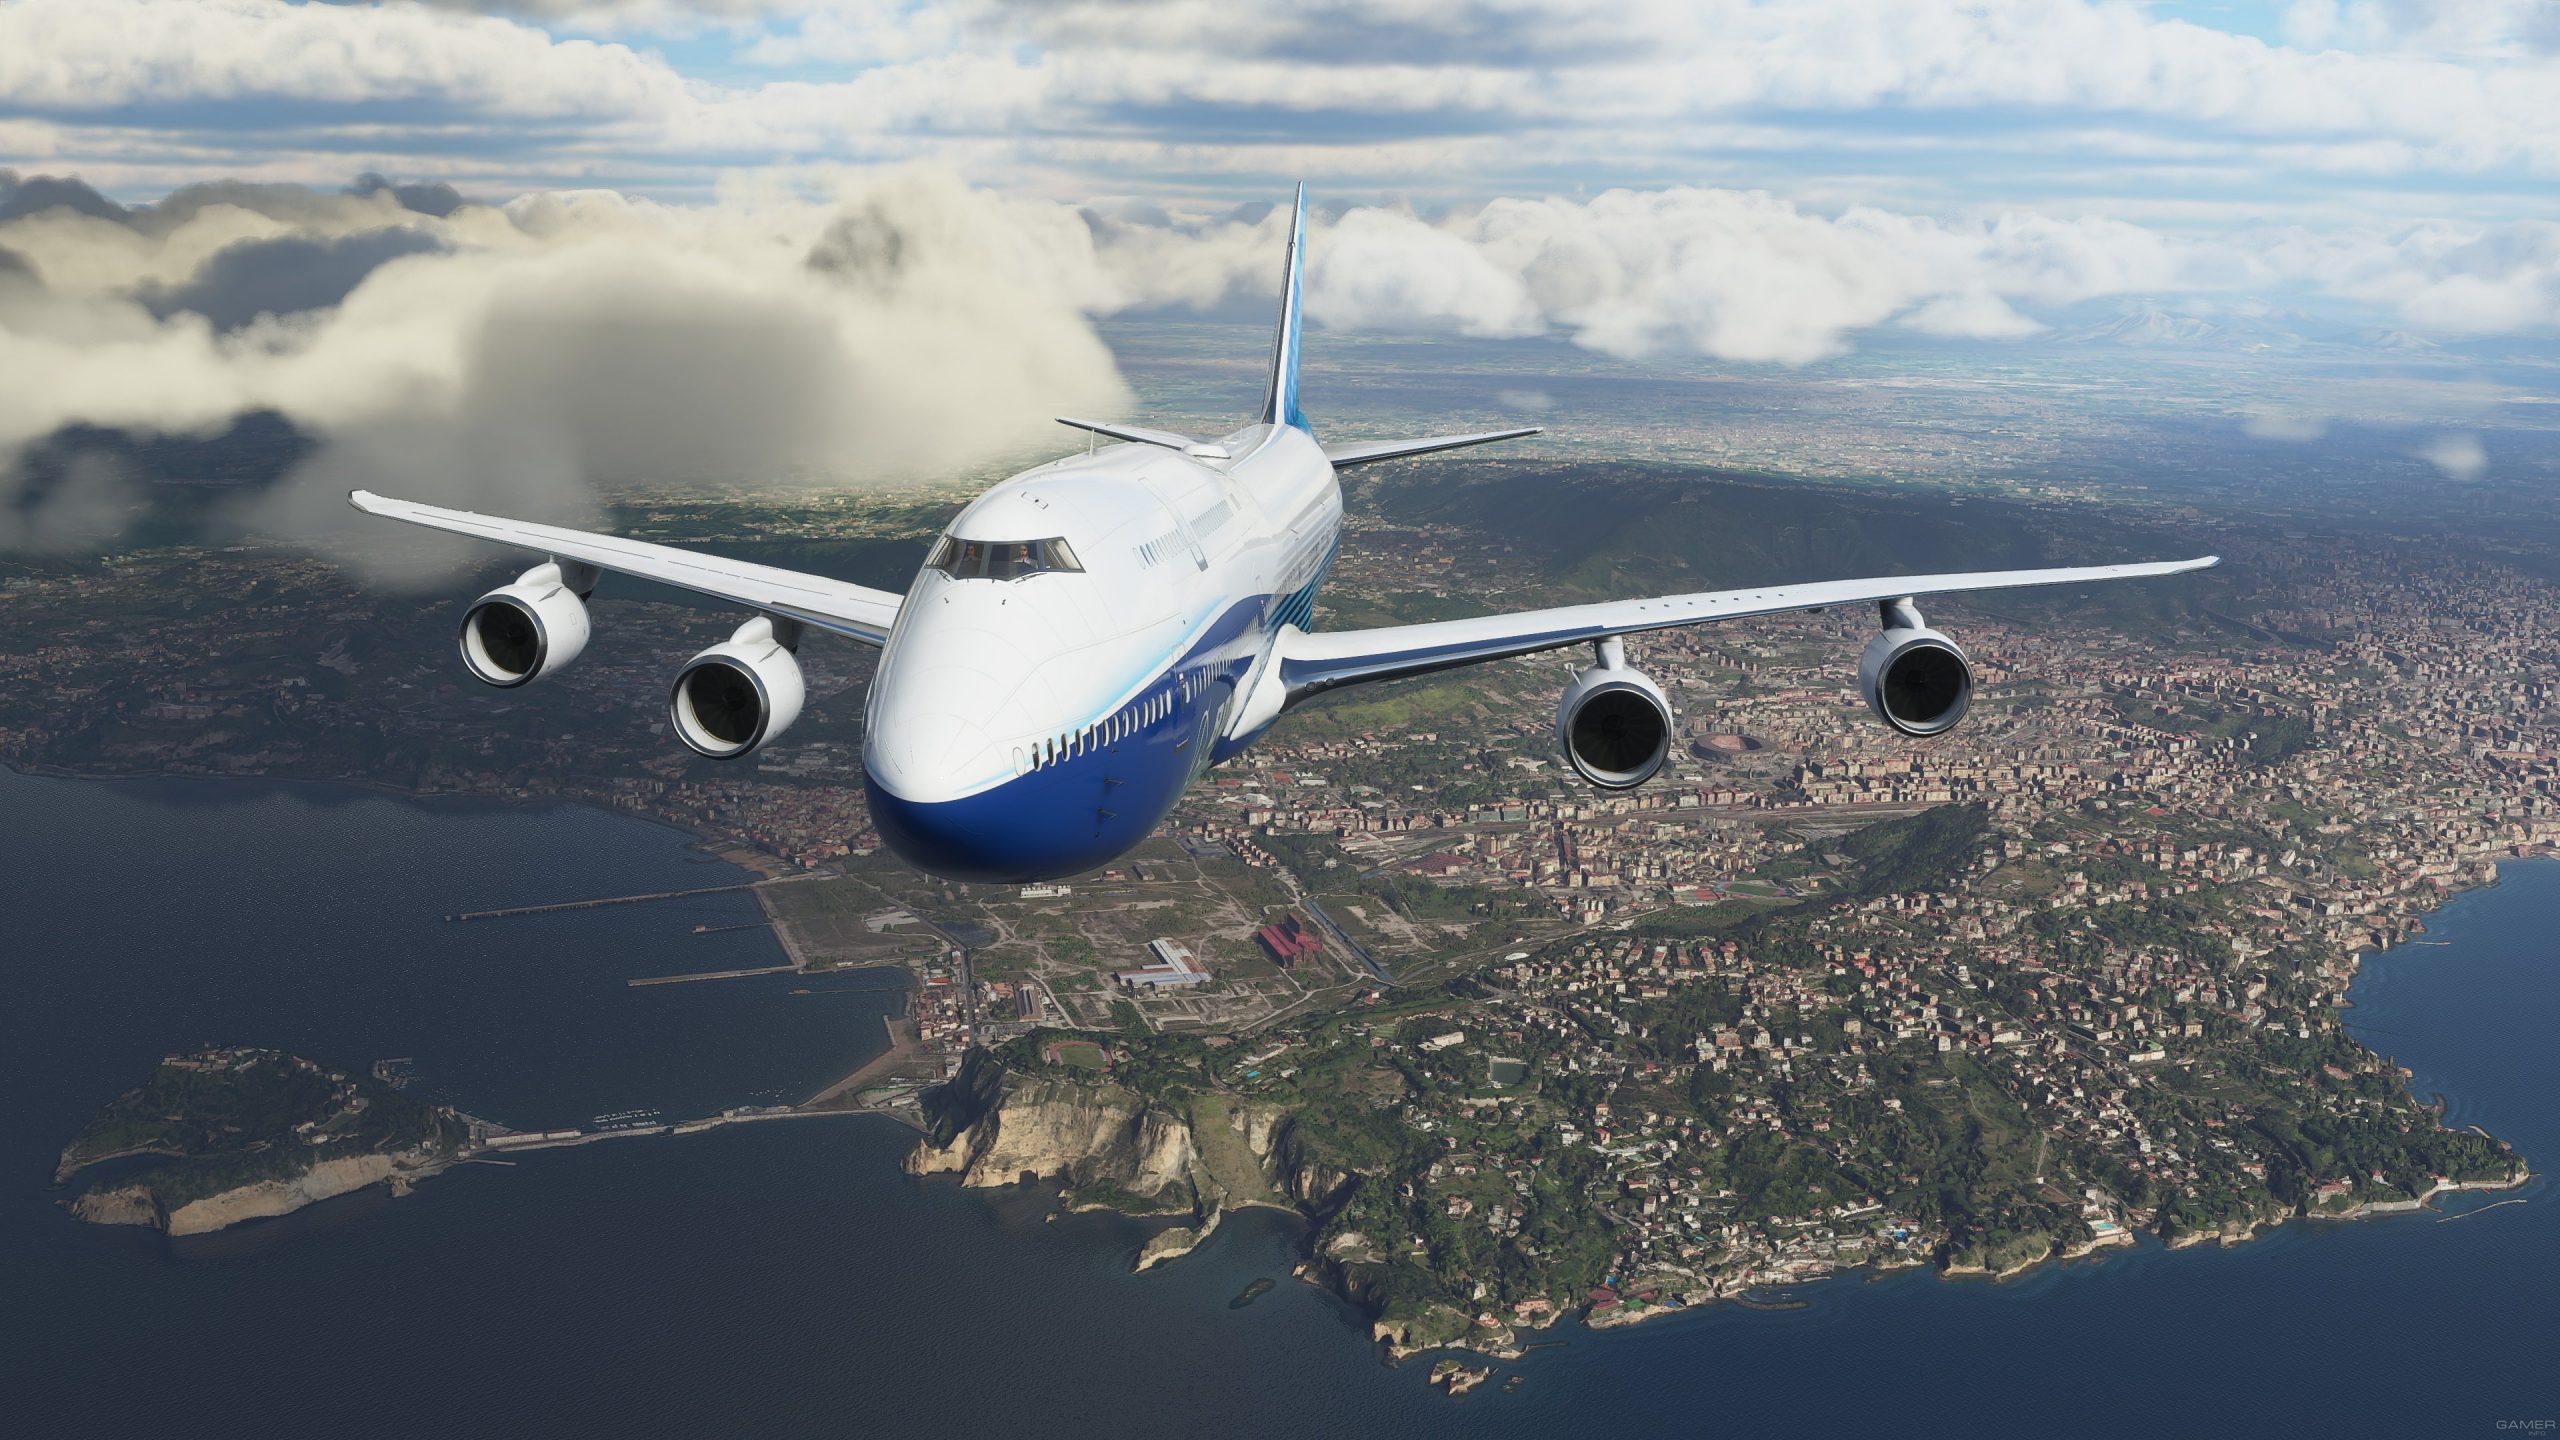 Microsoft Flight Simulator PC 